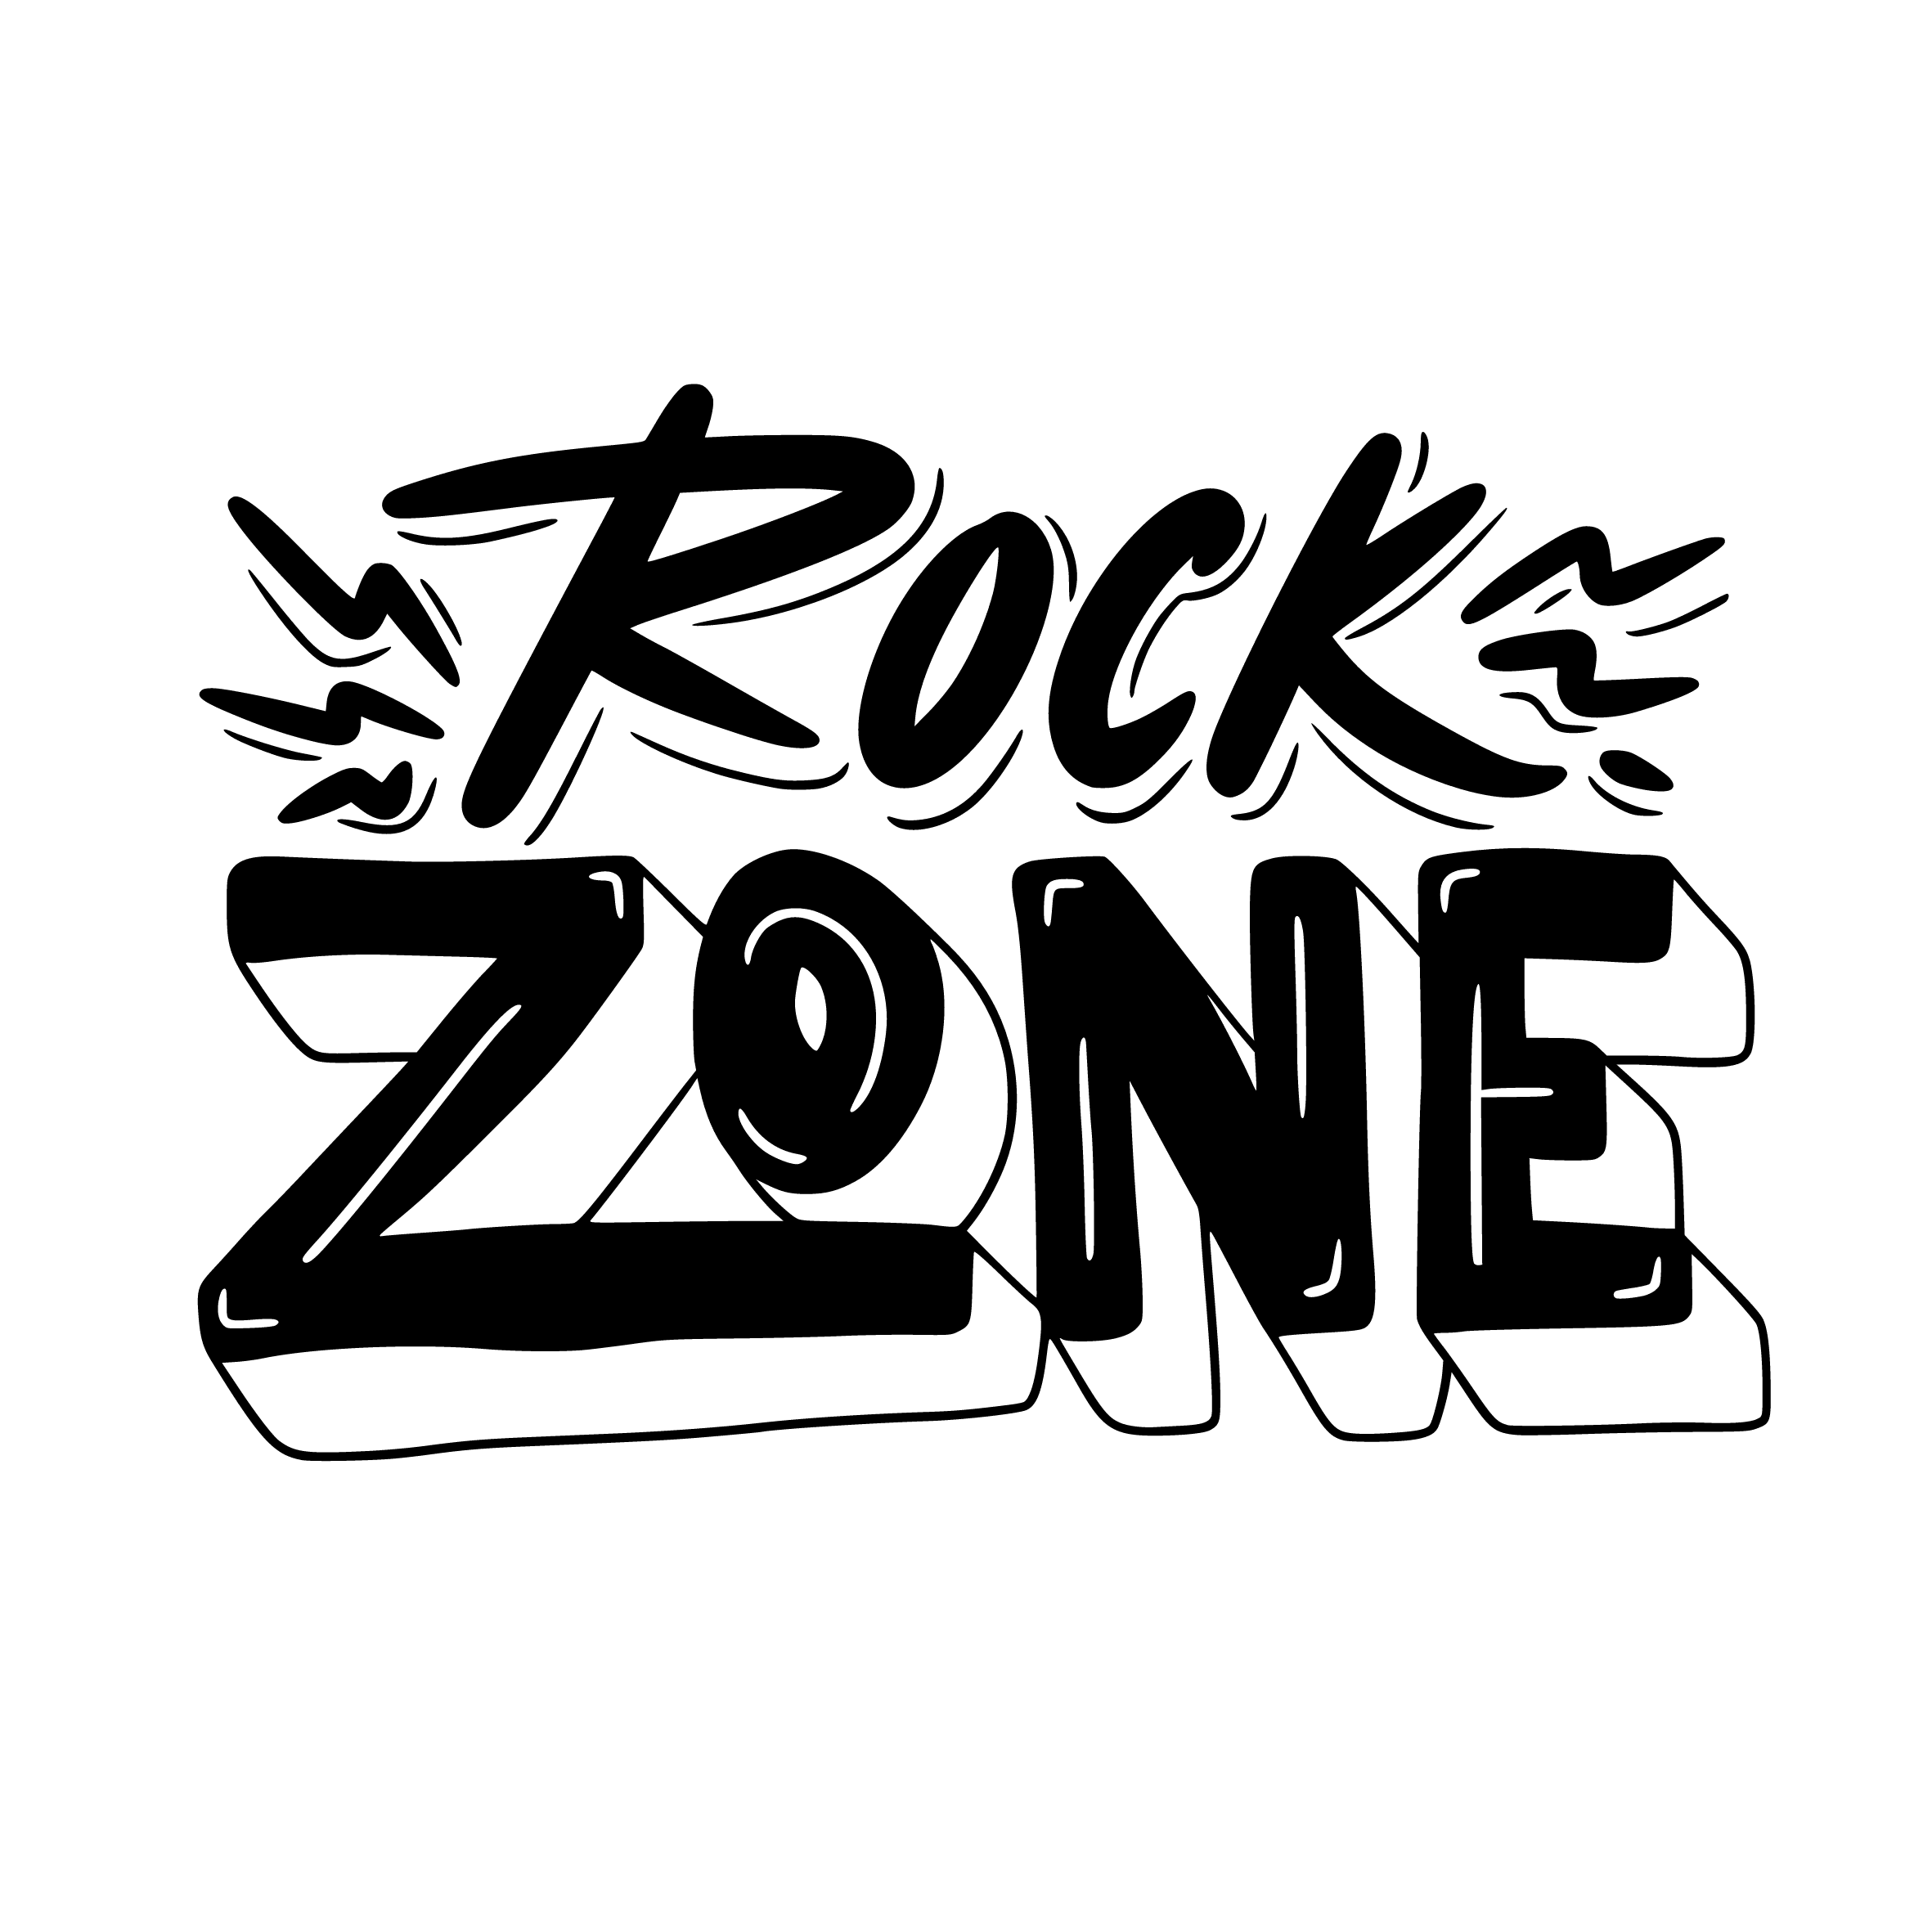 Rock Zone sticker 6cm